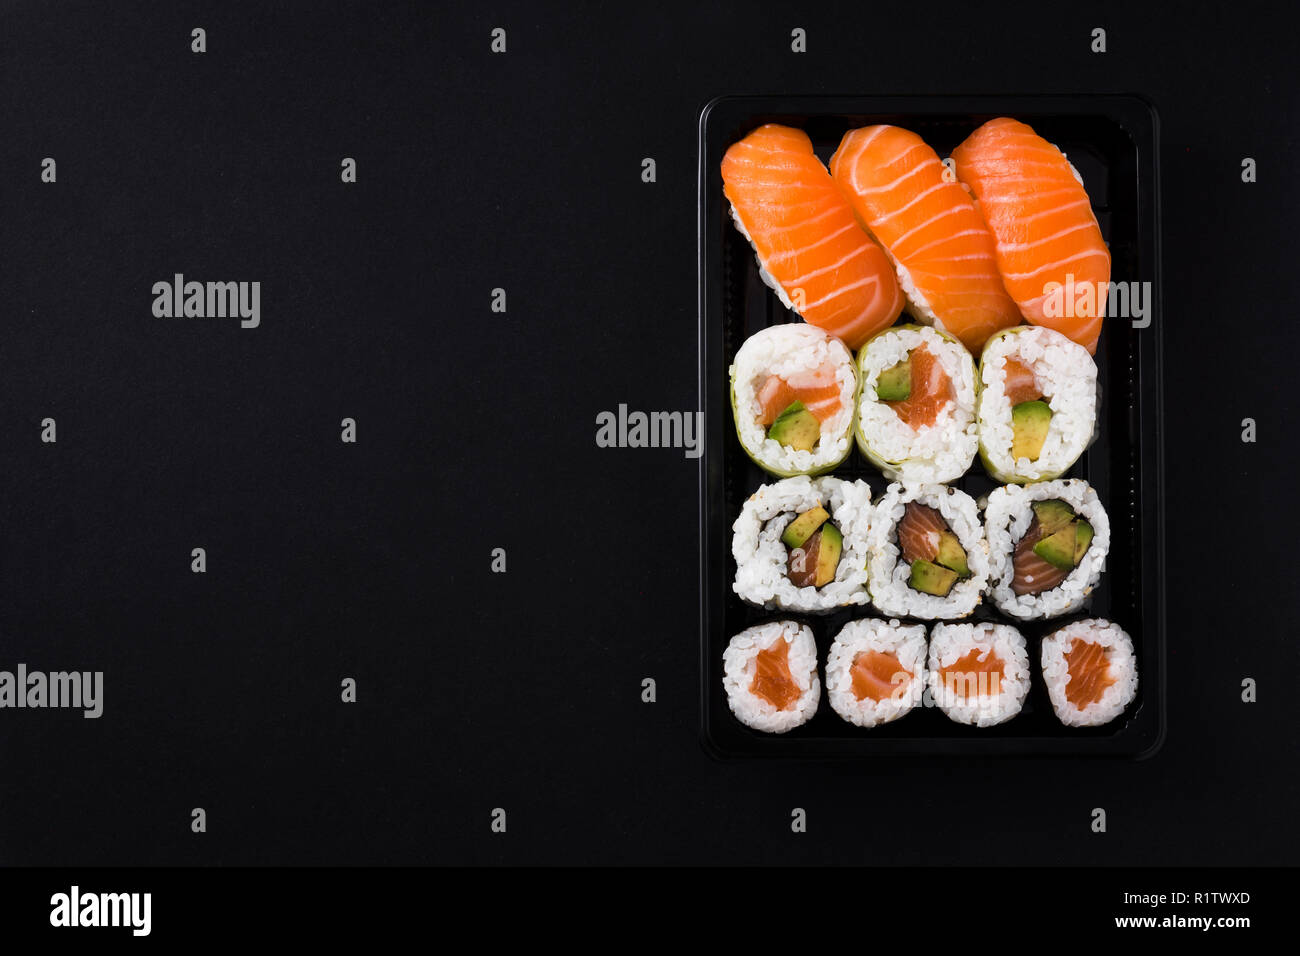 https://c8.alamy.com/comp/R1TWXD/japanese-food-maki-and-nigiri-sushi-set-on-black-background-flat-lay-top-down-composition-copyspace-R1TWXD.jpg